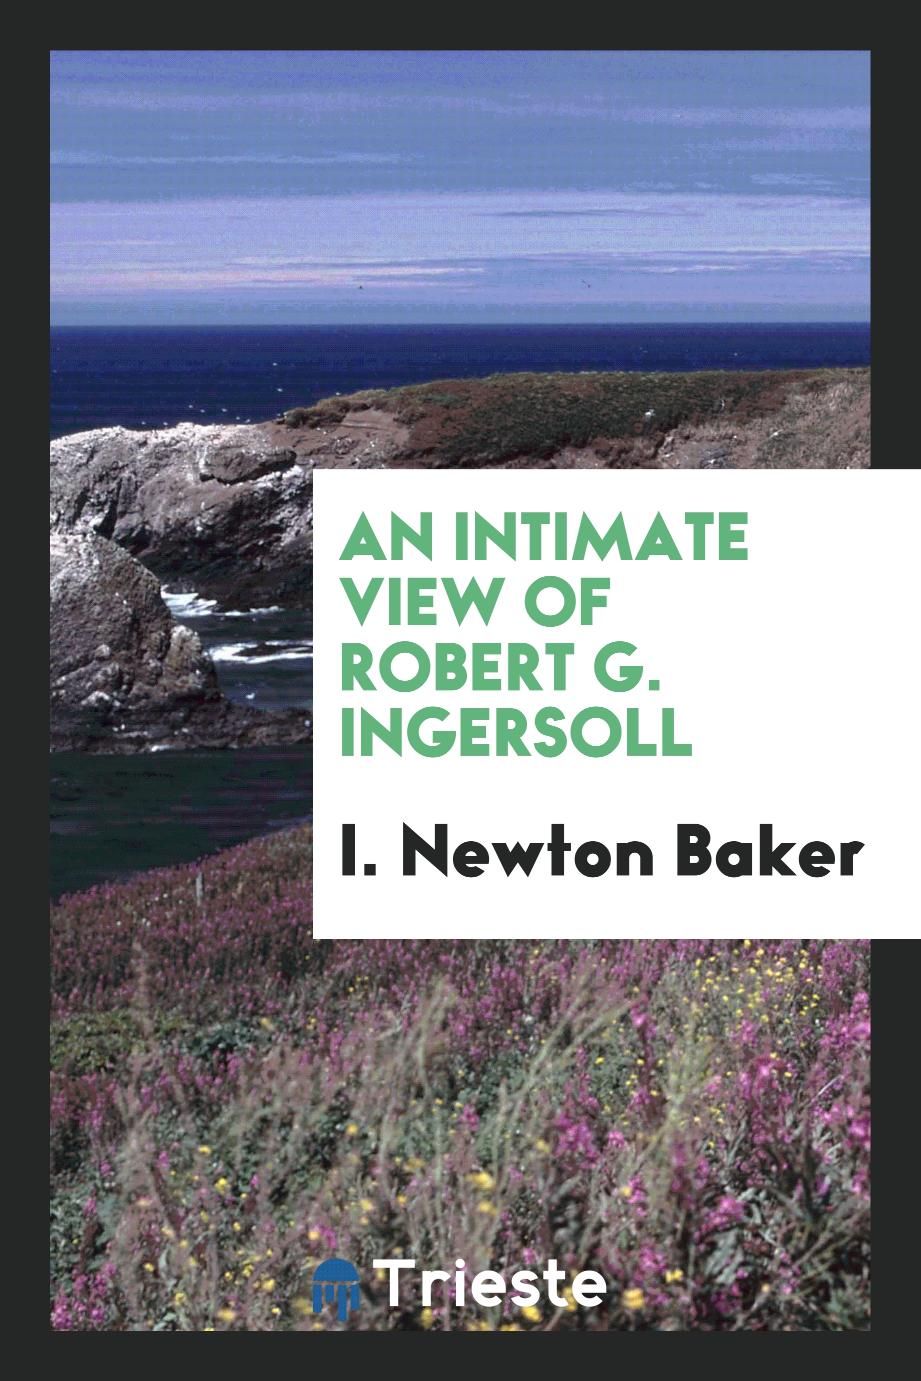 An intimate view of Robert G. Ingersoll